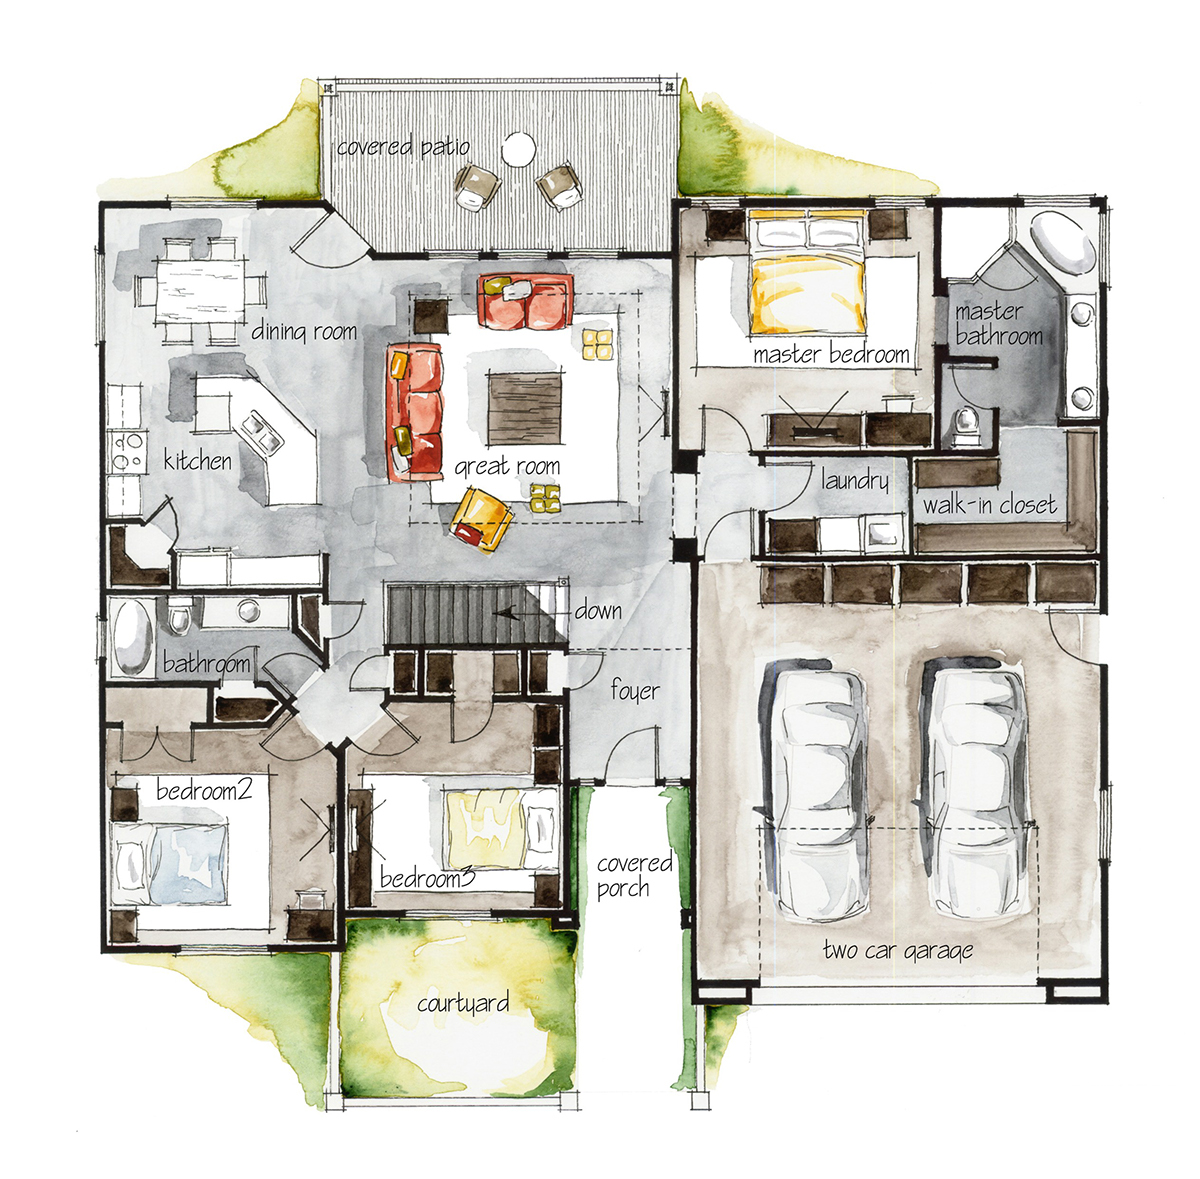 Real Estate Watercolor 2D Floor Plans Part 3 on Behance